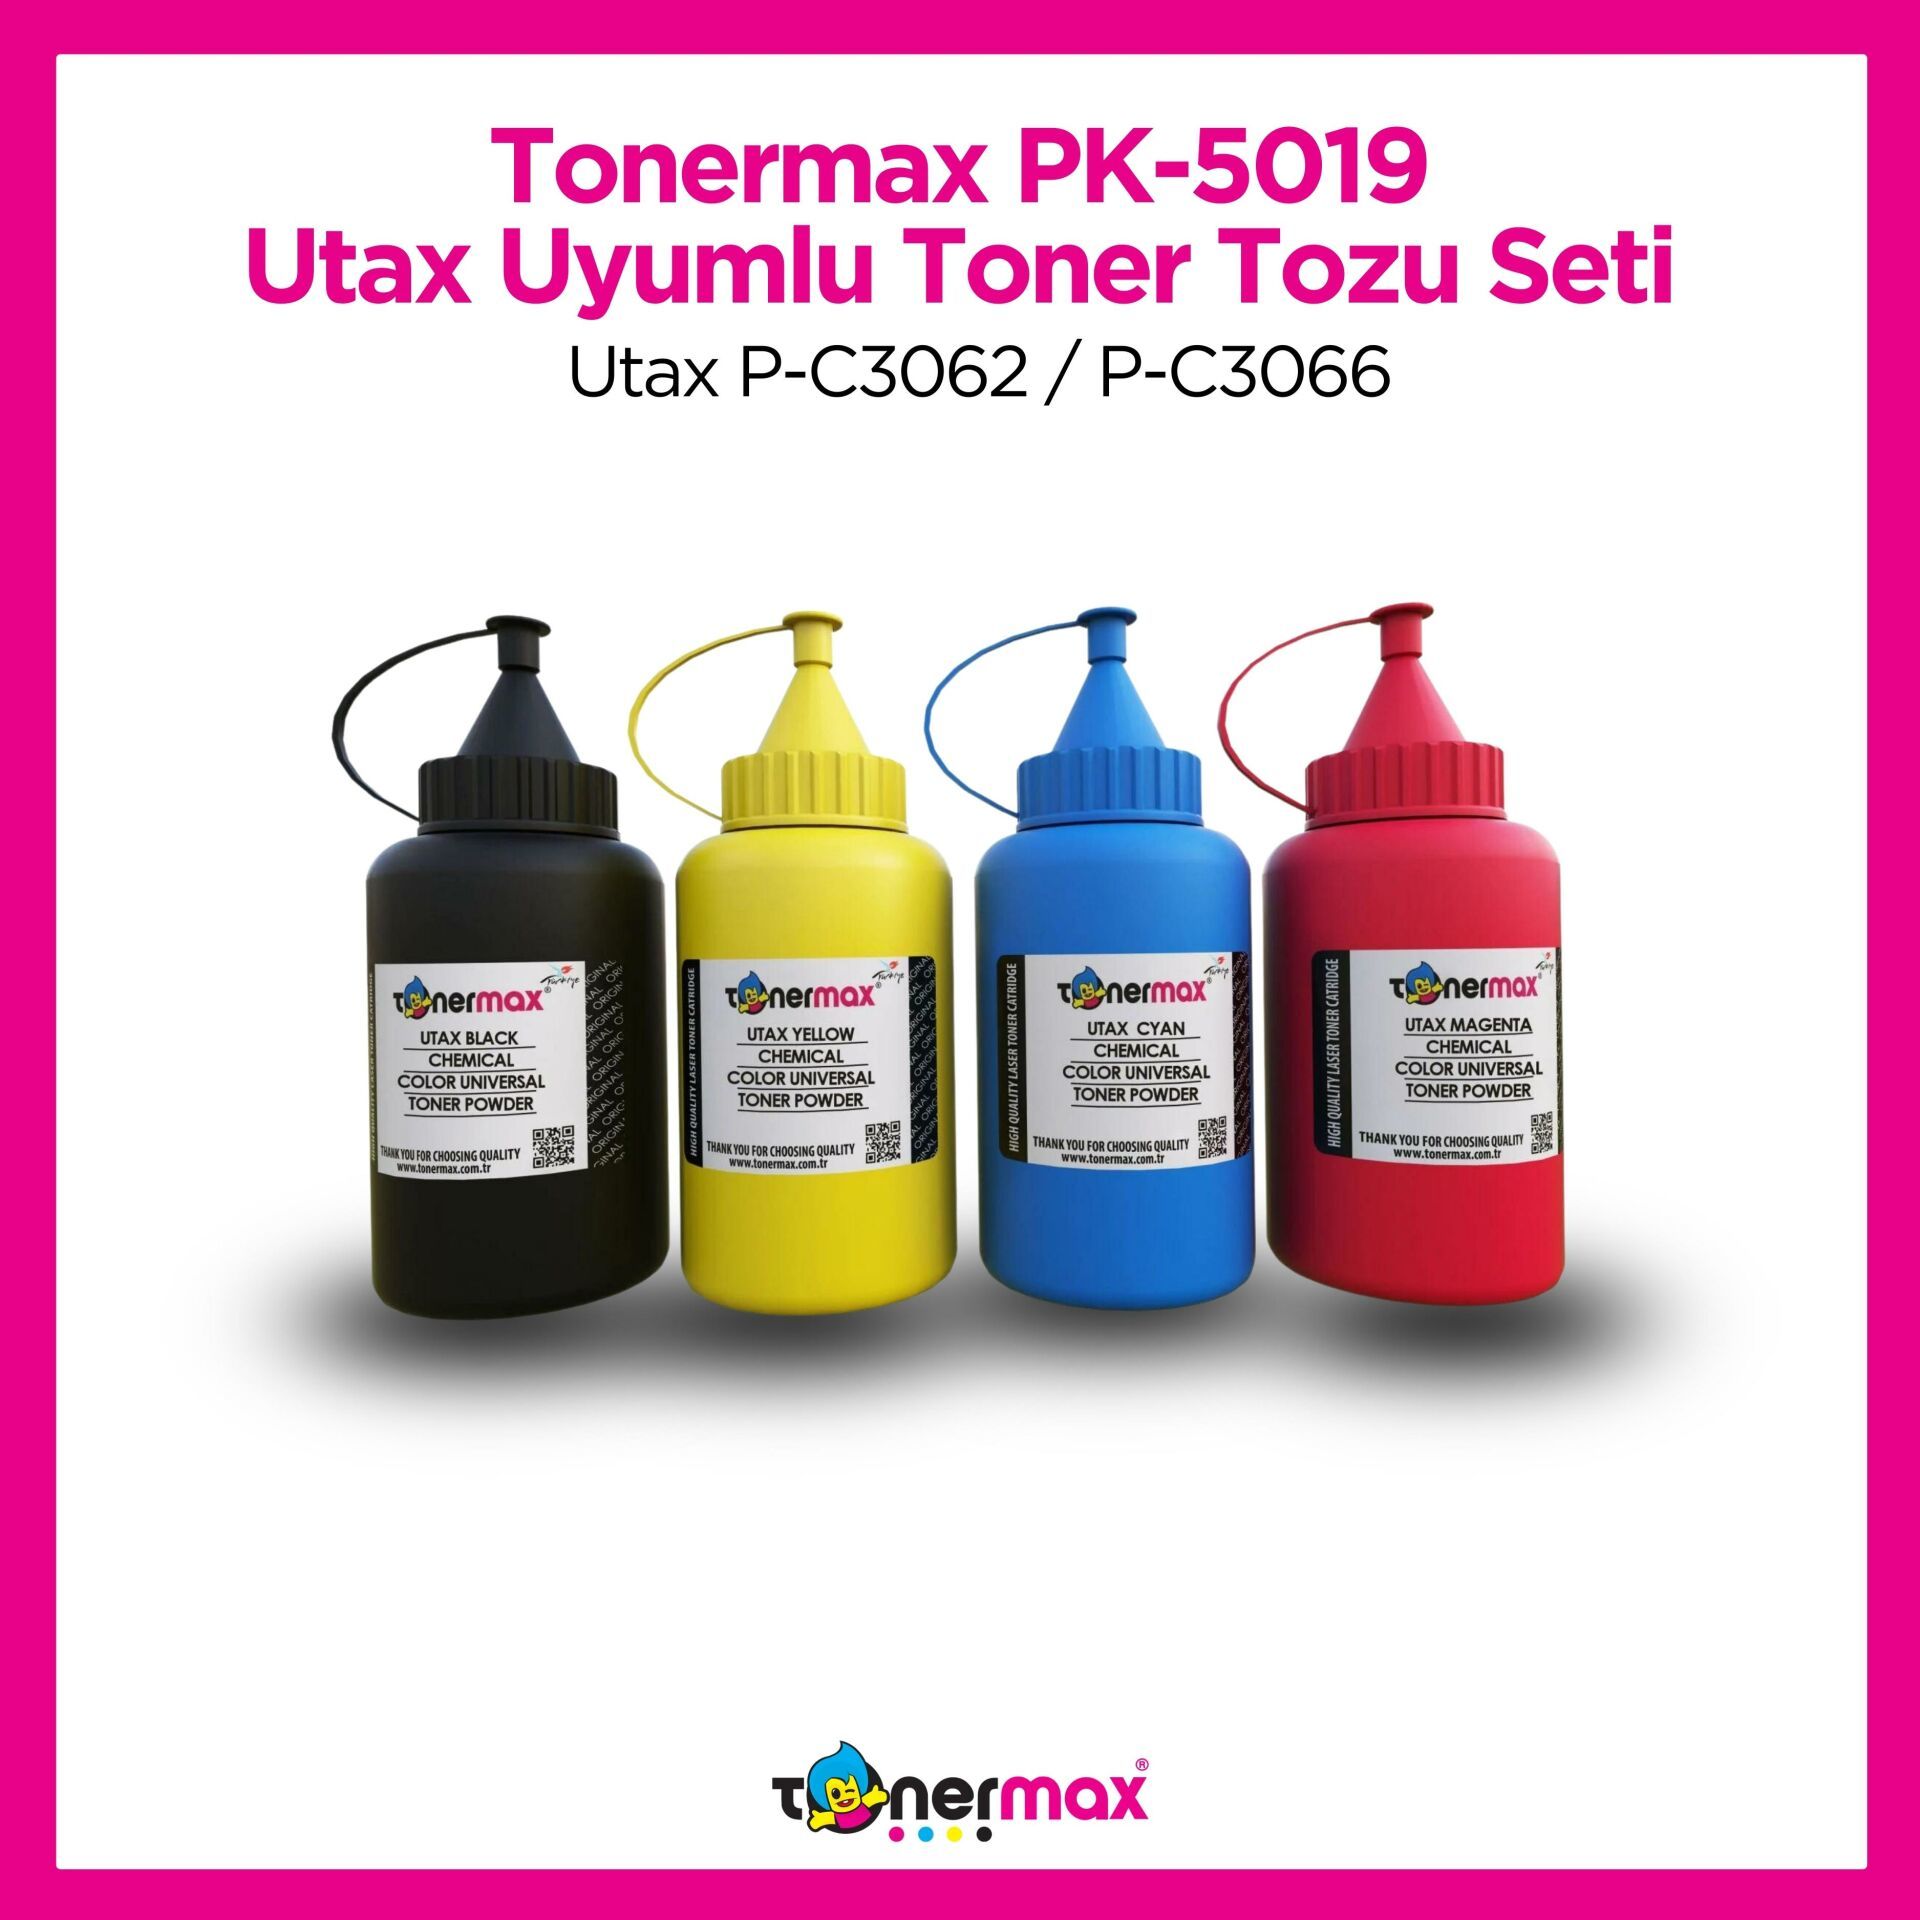 Utax PK-5019 Toner Tozu- Set / Utax P-C4072